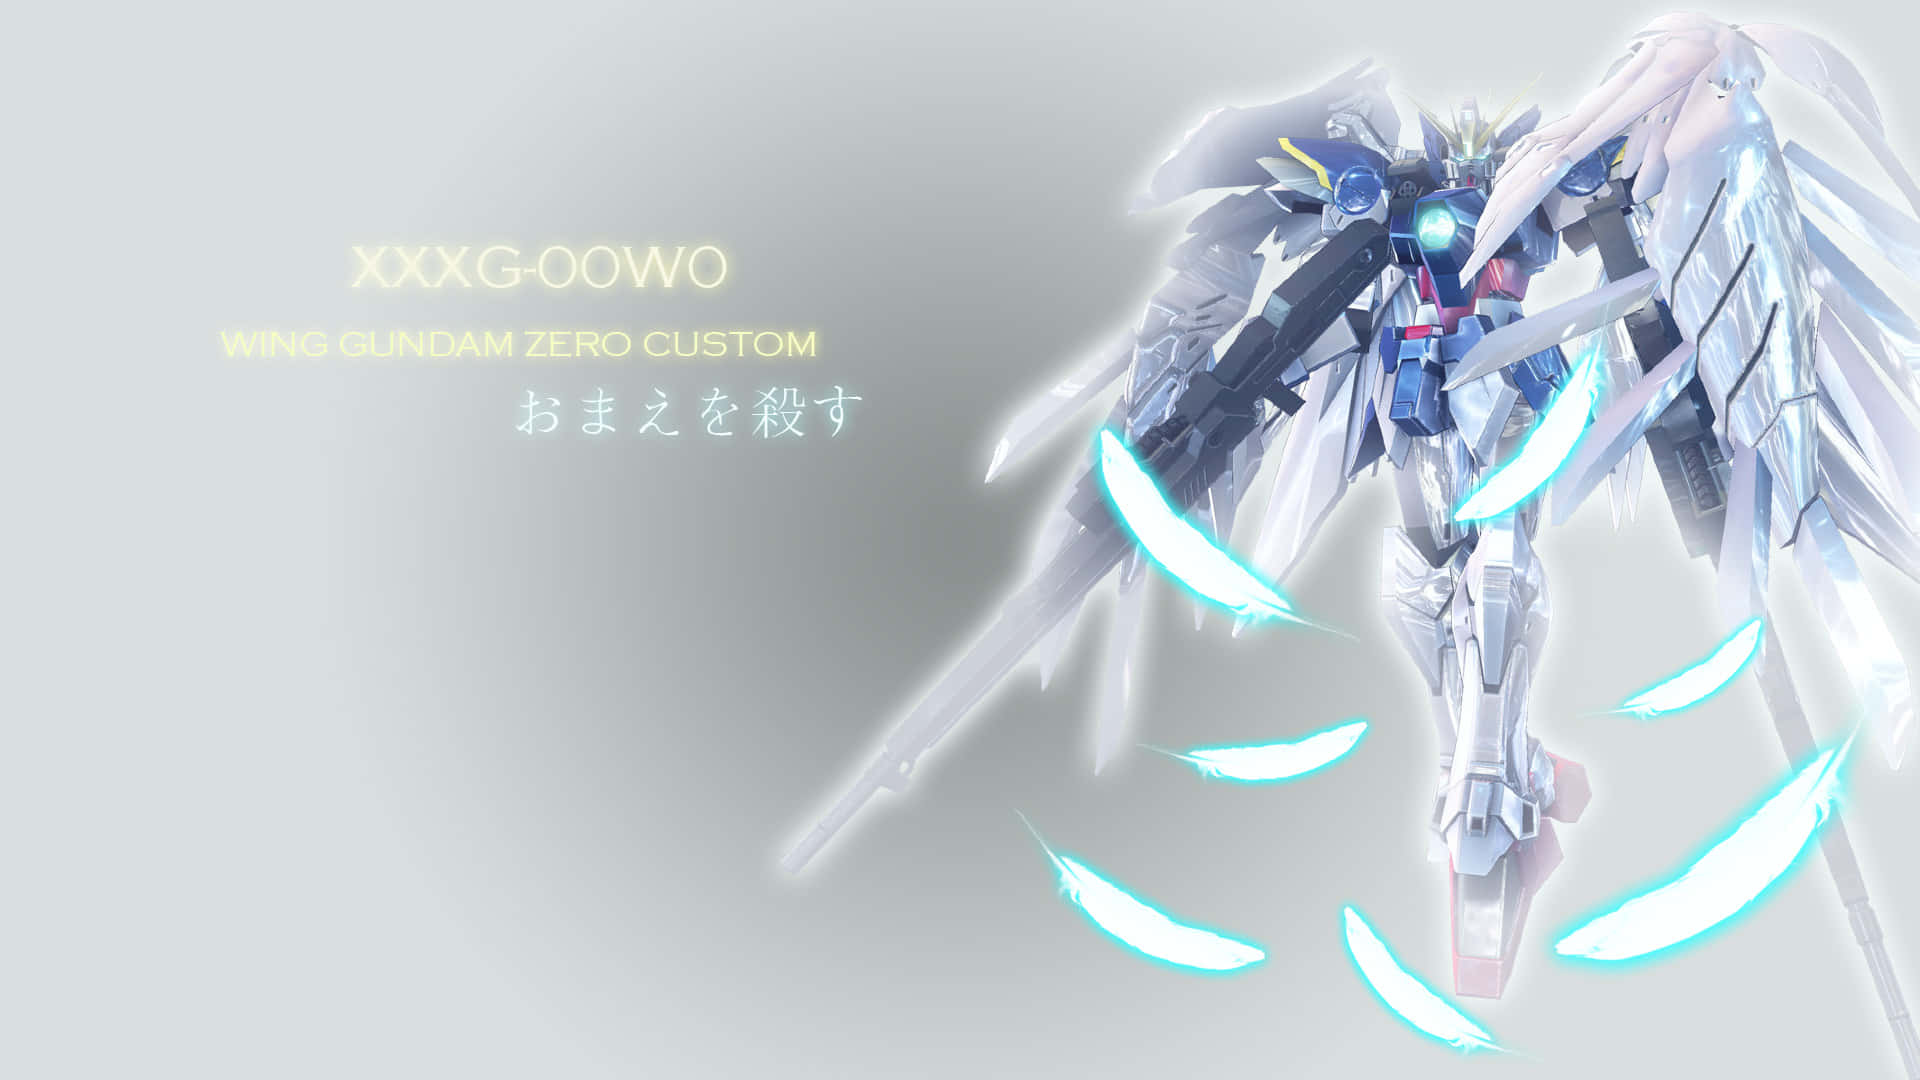 Gundamwing, Strider I Rymden Wallpaper